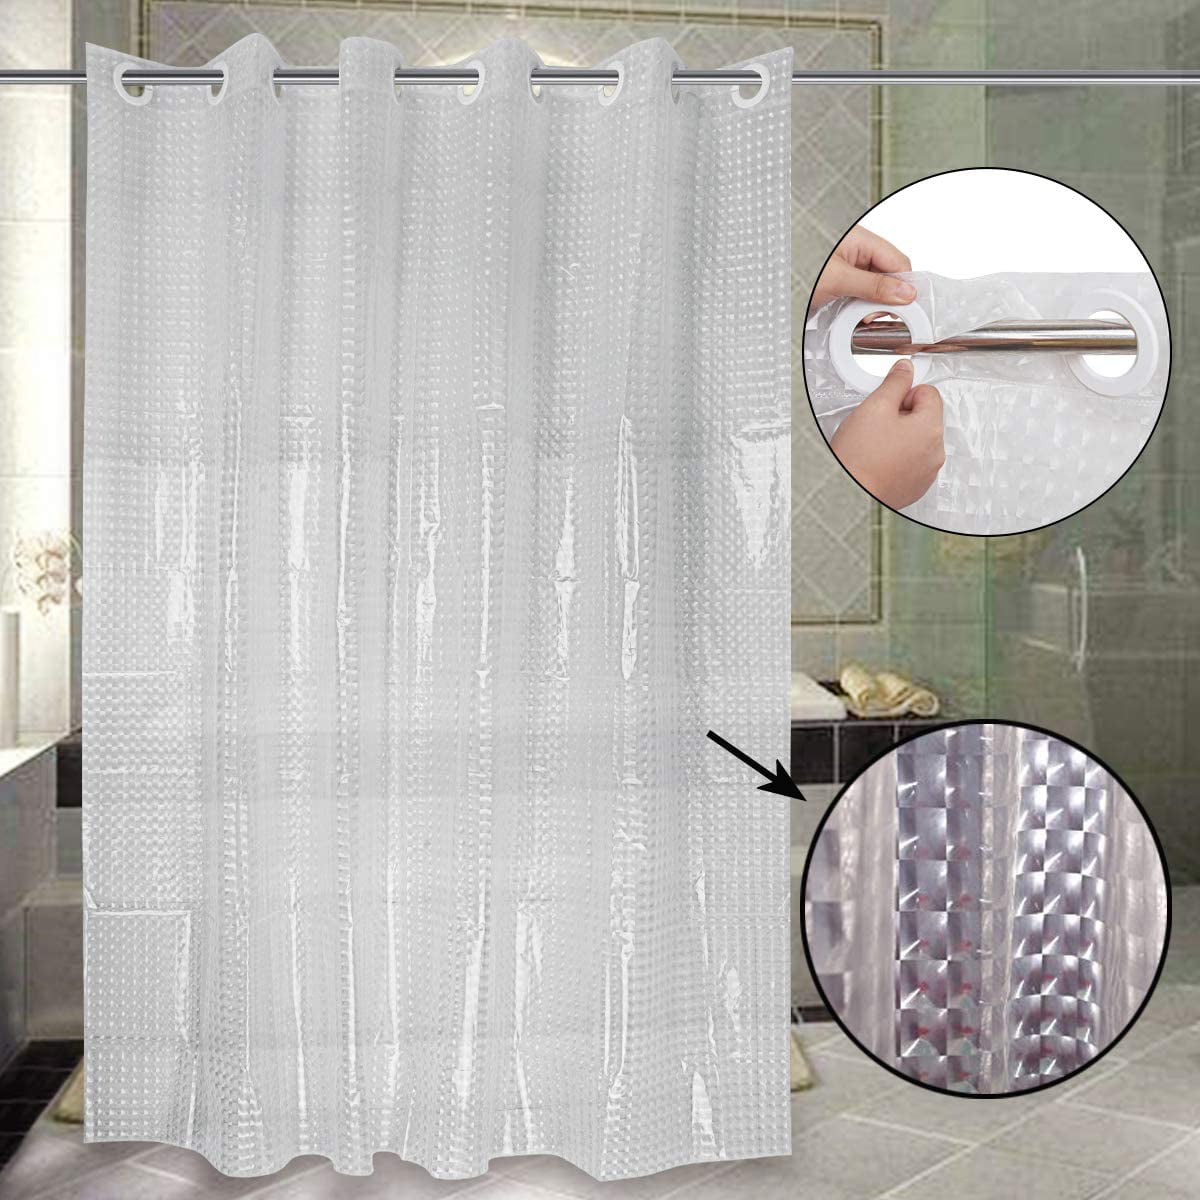 Plastic Shower Curtain 3d Crystal Hook, Shower Curtain Liner Hooks